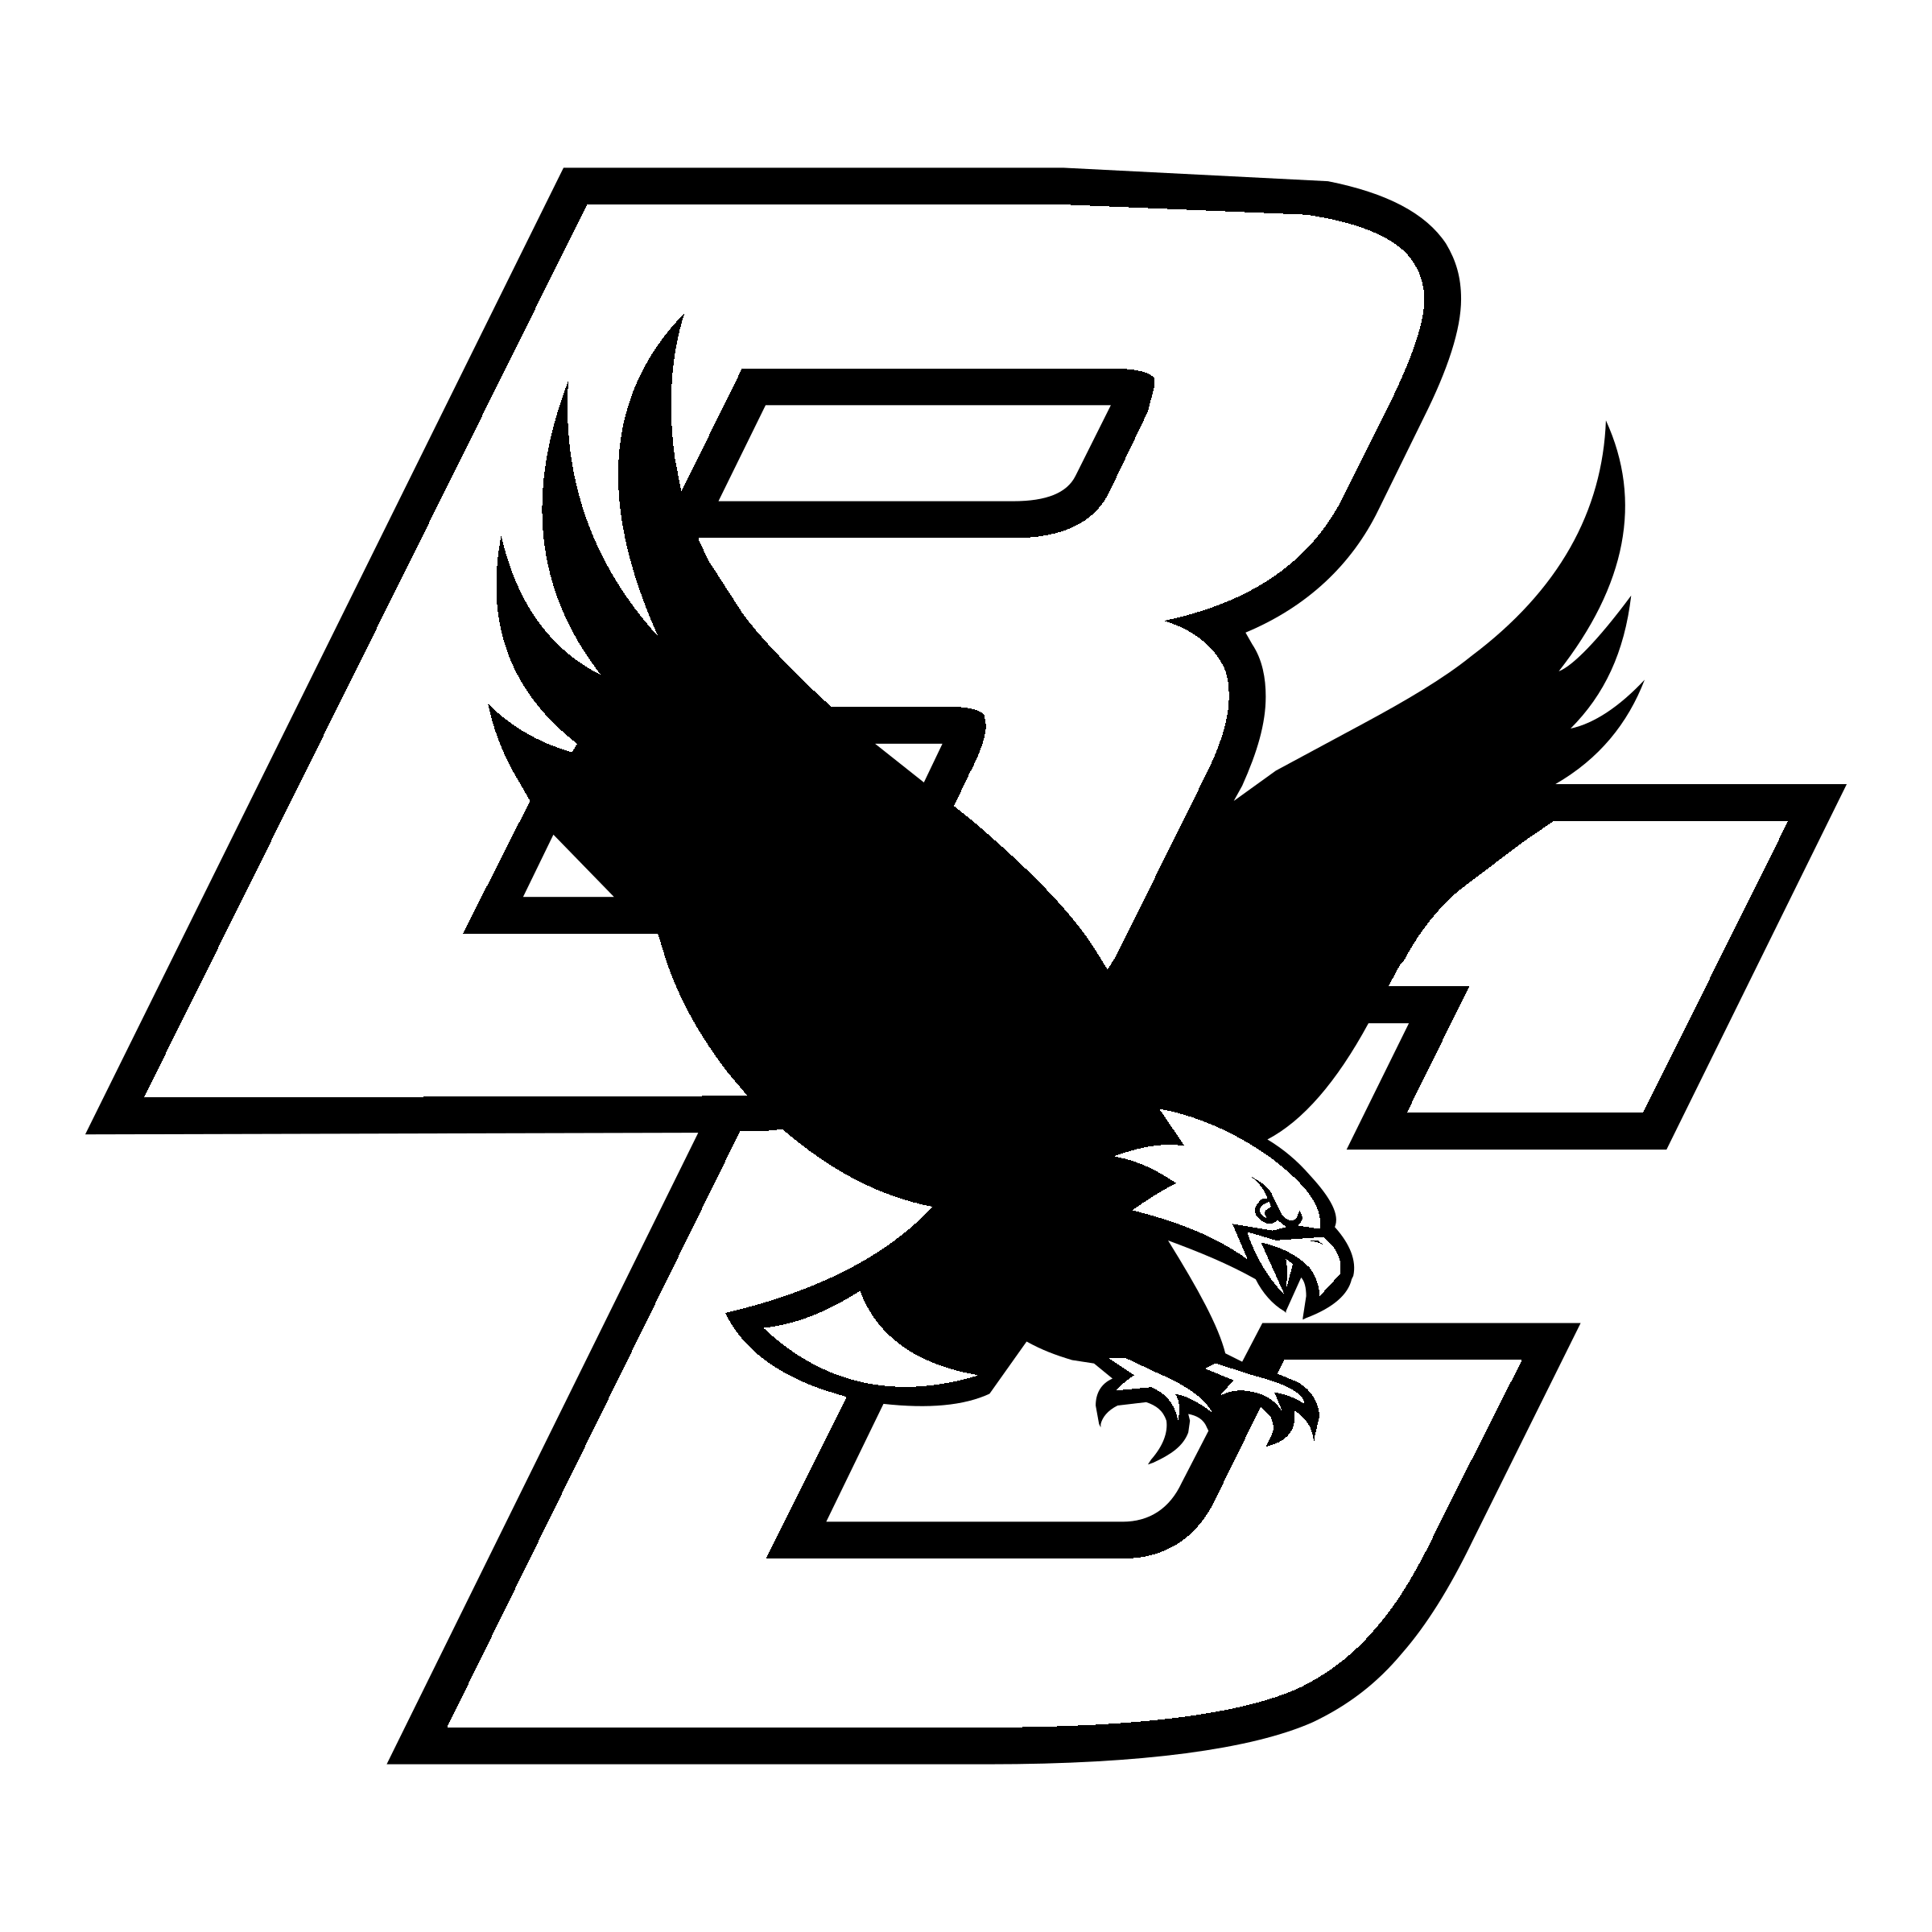 Boston College Logo - Boston College Eagles Logo PNG Transparent & SVG Vector - Freebie Supply